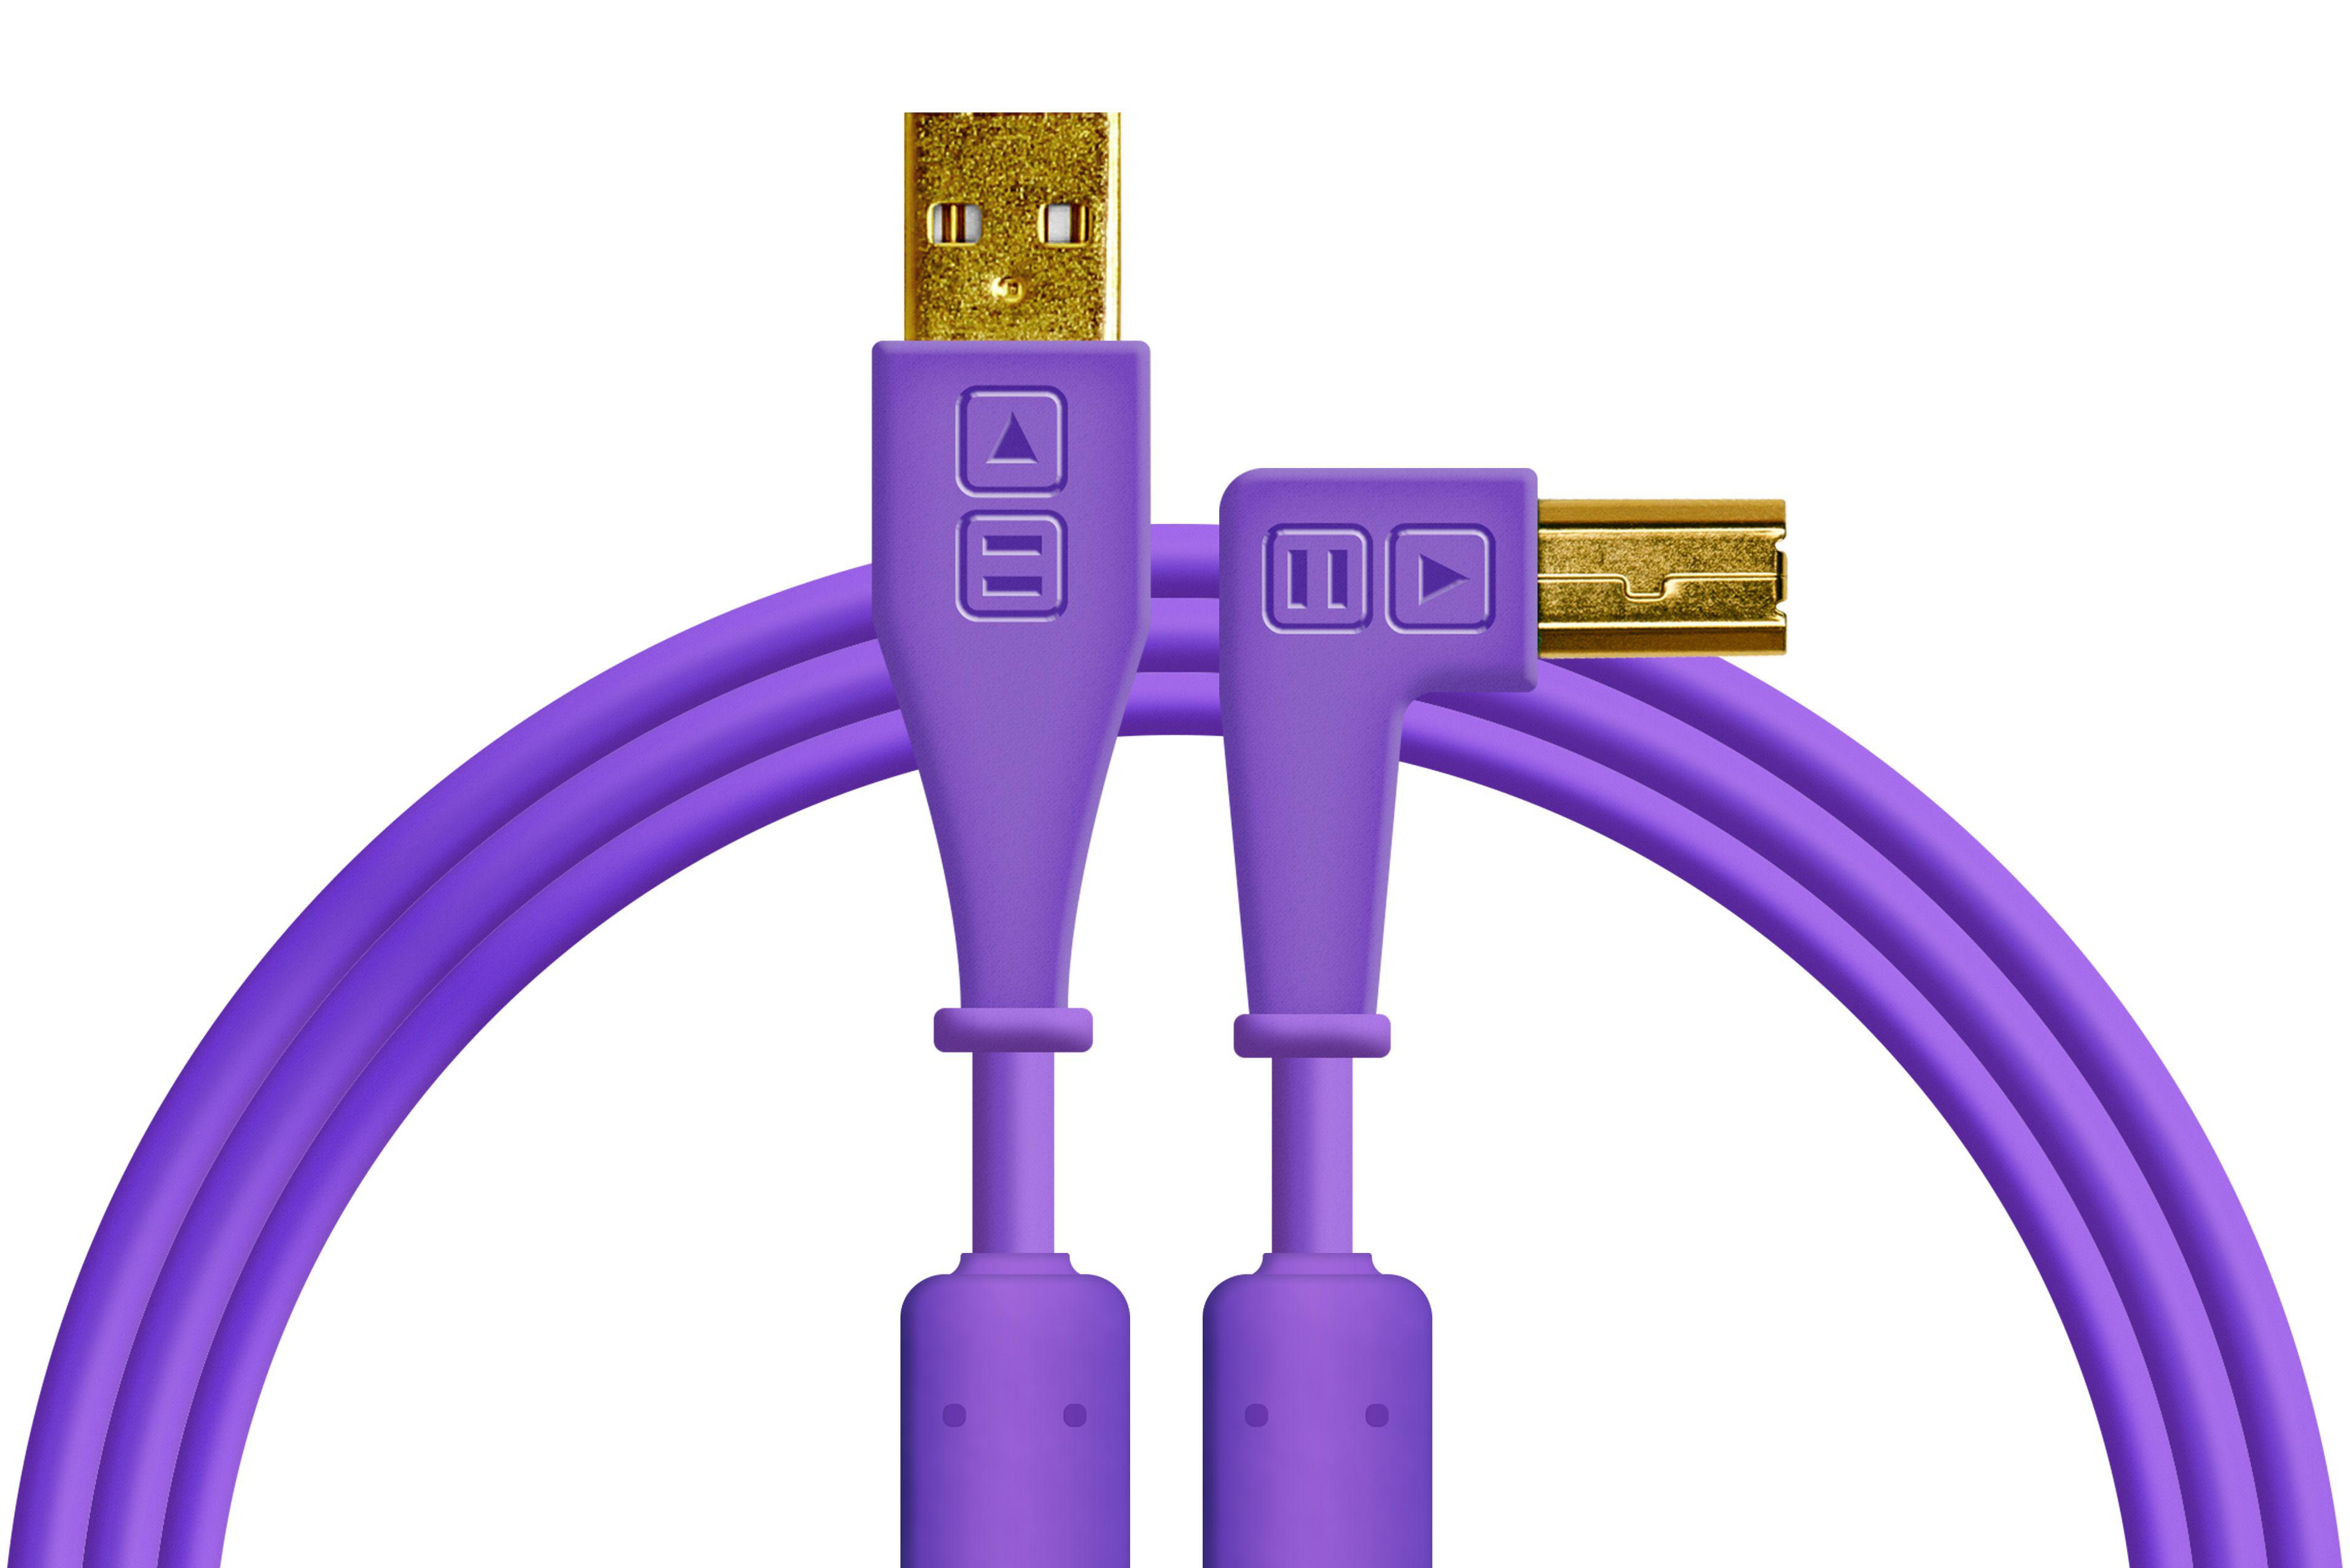 DJTT - Cable de Datos y Audio USB-A a USB-B, Recto / Angulado Color: Morado_21